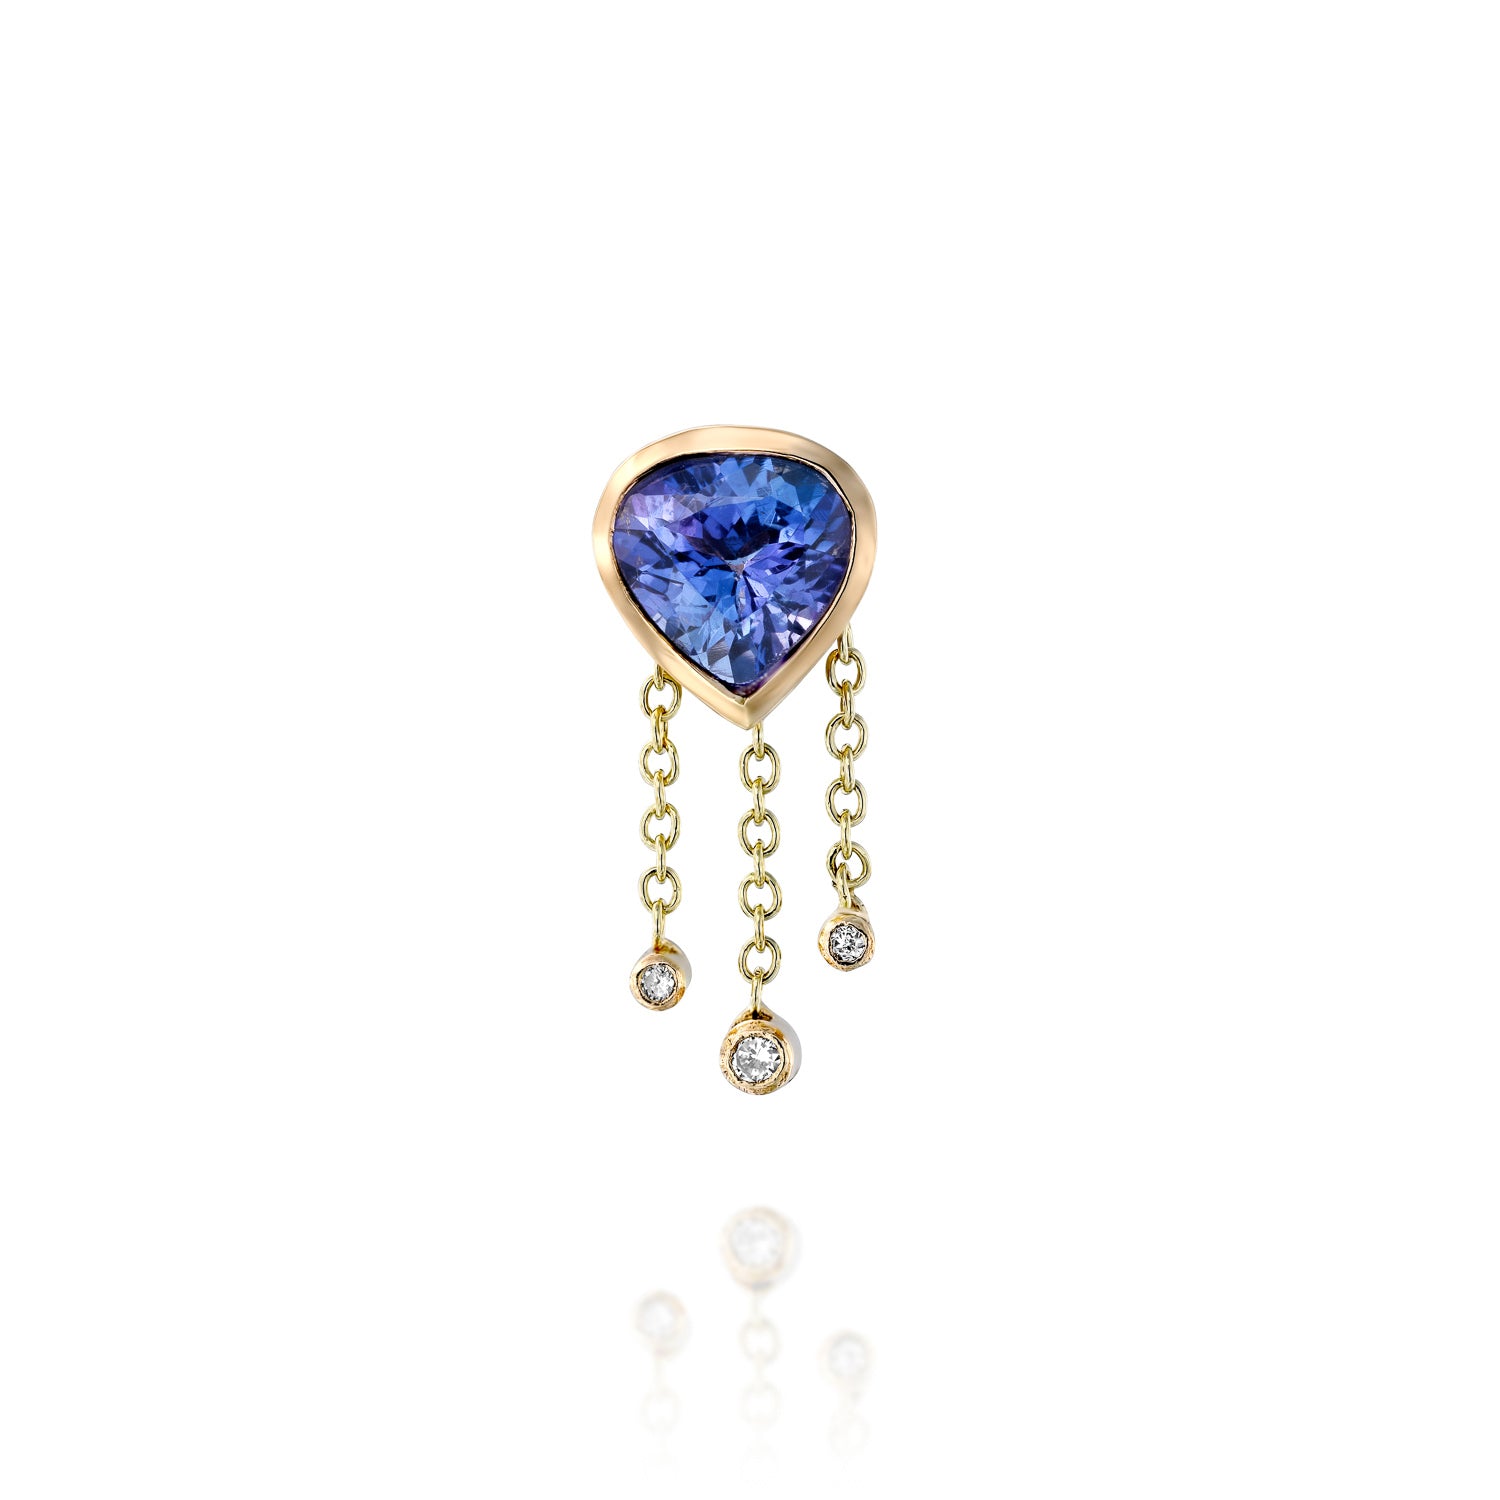 Bhagsu Earring & Tanzanite  - one of a kind - Danielle Gerber Freedom Jewelry